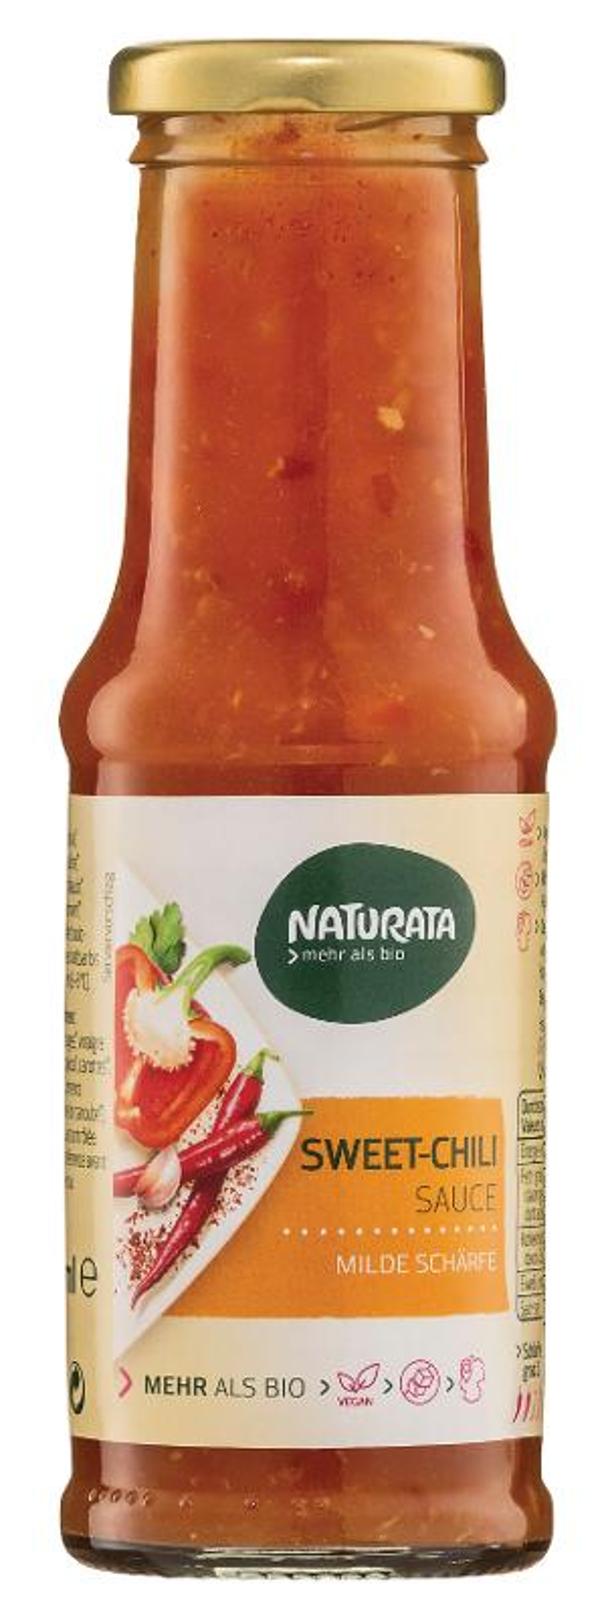 Produktfoto zu Naturata Sweet Chili Sauce - 210ml